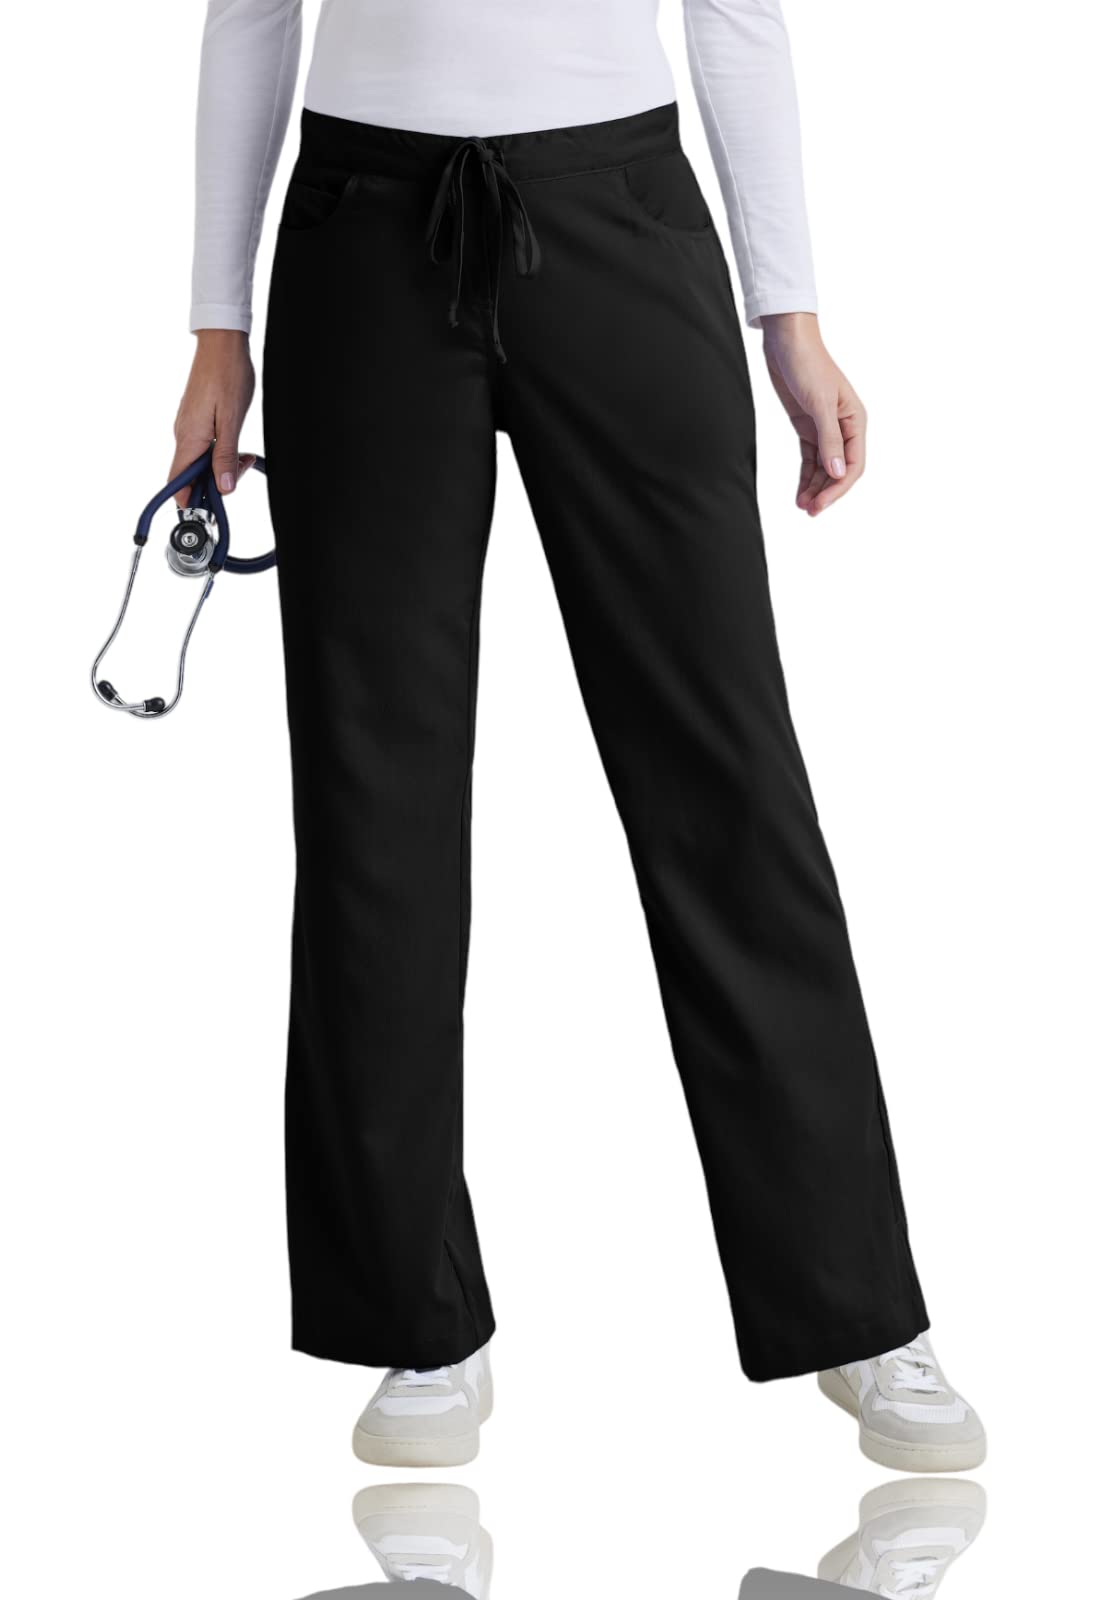 BARCO Grey's Anatomy Scrubs - Riley Scrub Pant for Women Elastic Back Waist  Mid-Rise Flared Leg Women's Scrub Pant Large Black